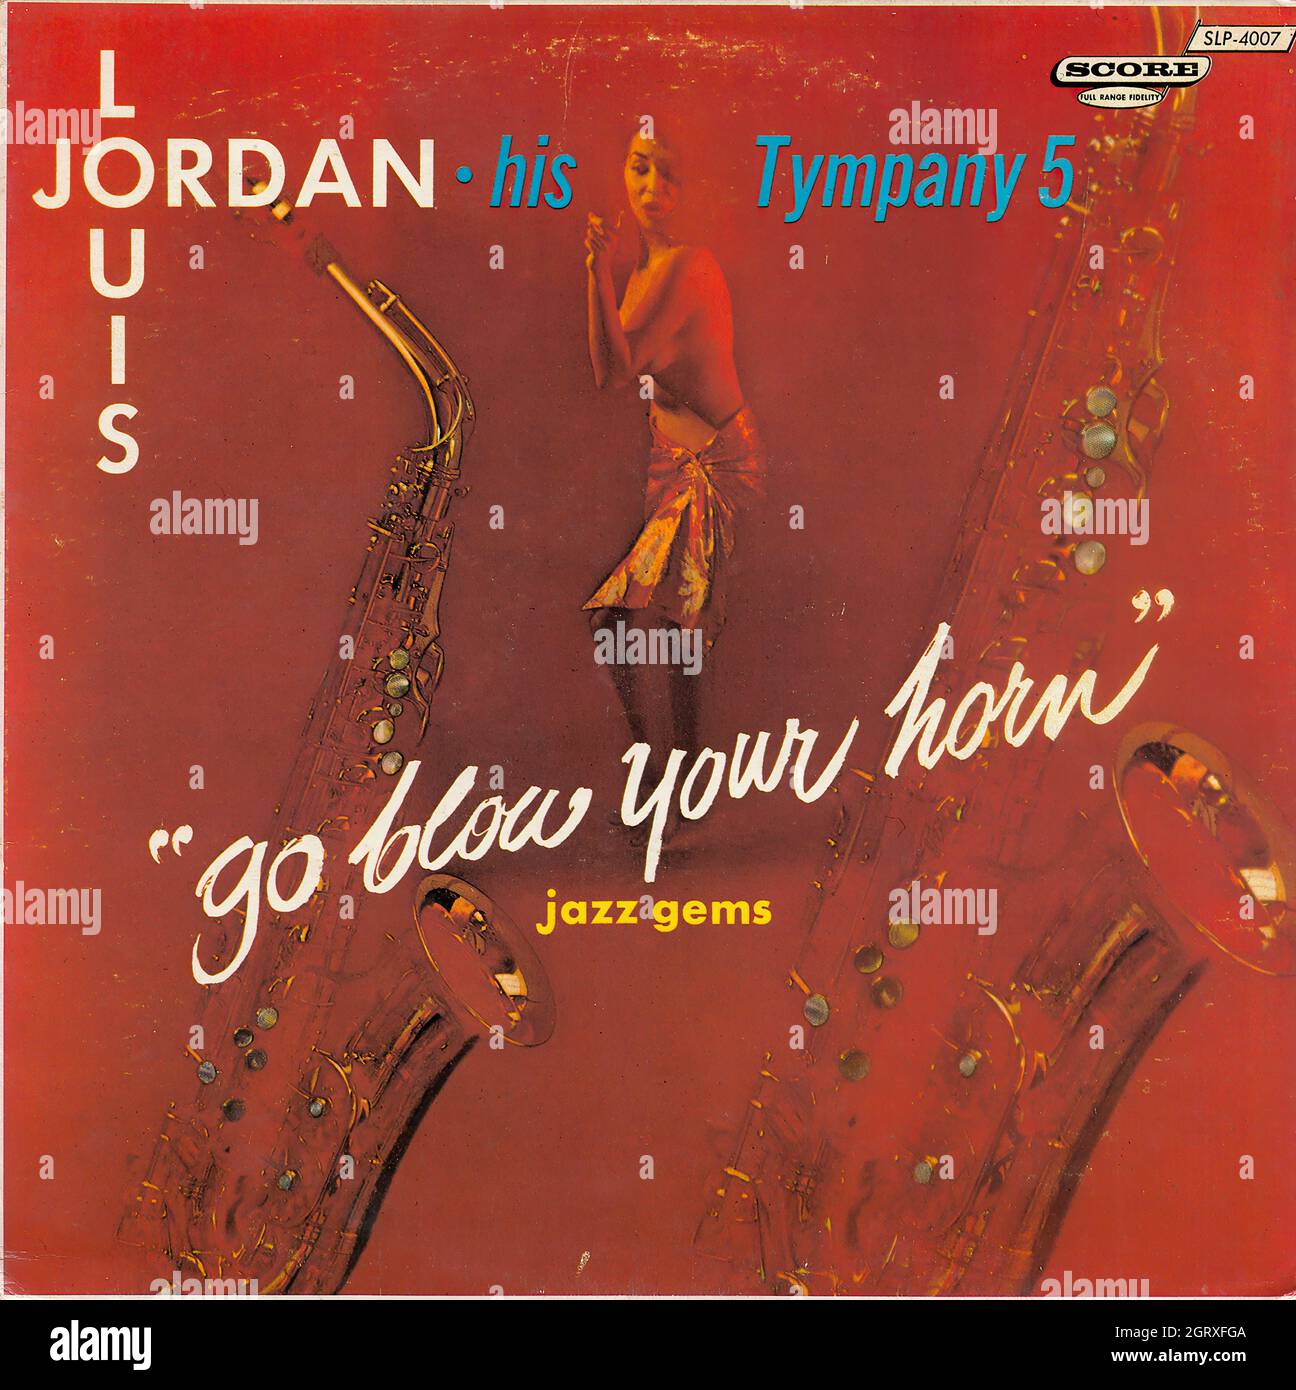 Louis Jordan his Tympany Five - Go blow horn - Vinyl Record Cover Stock Photo - Alamy